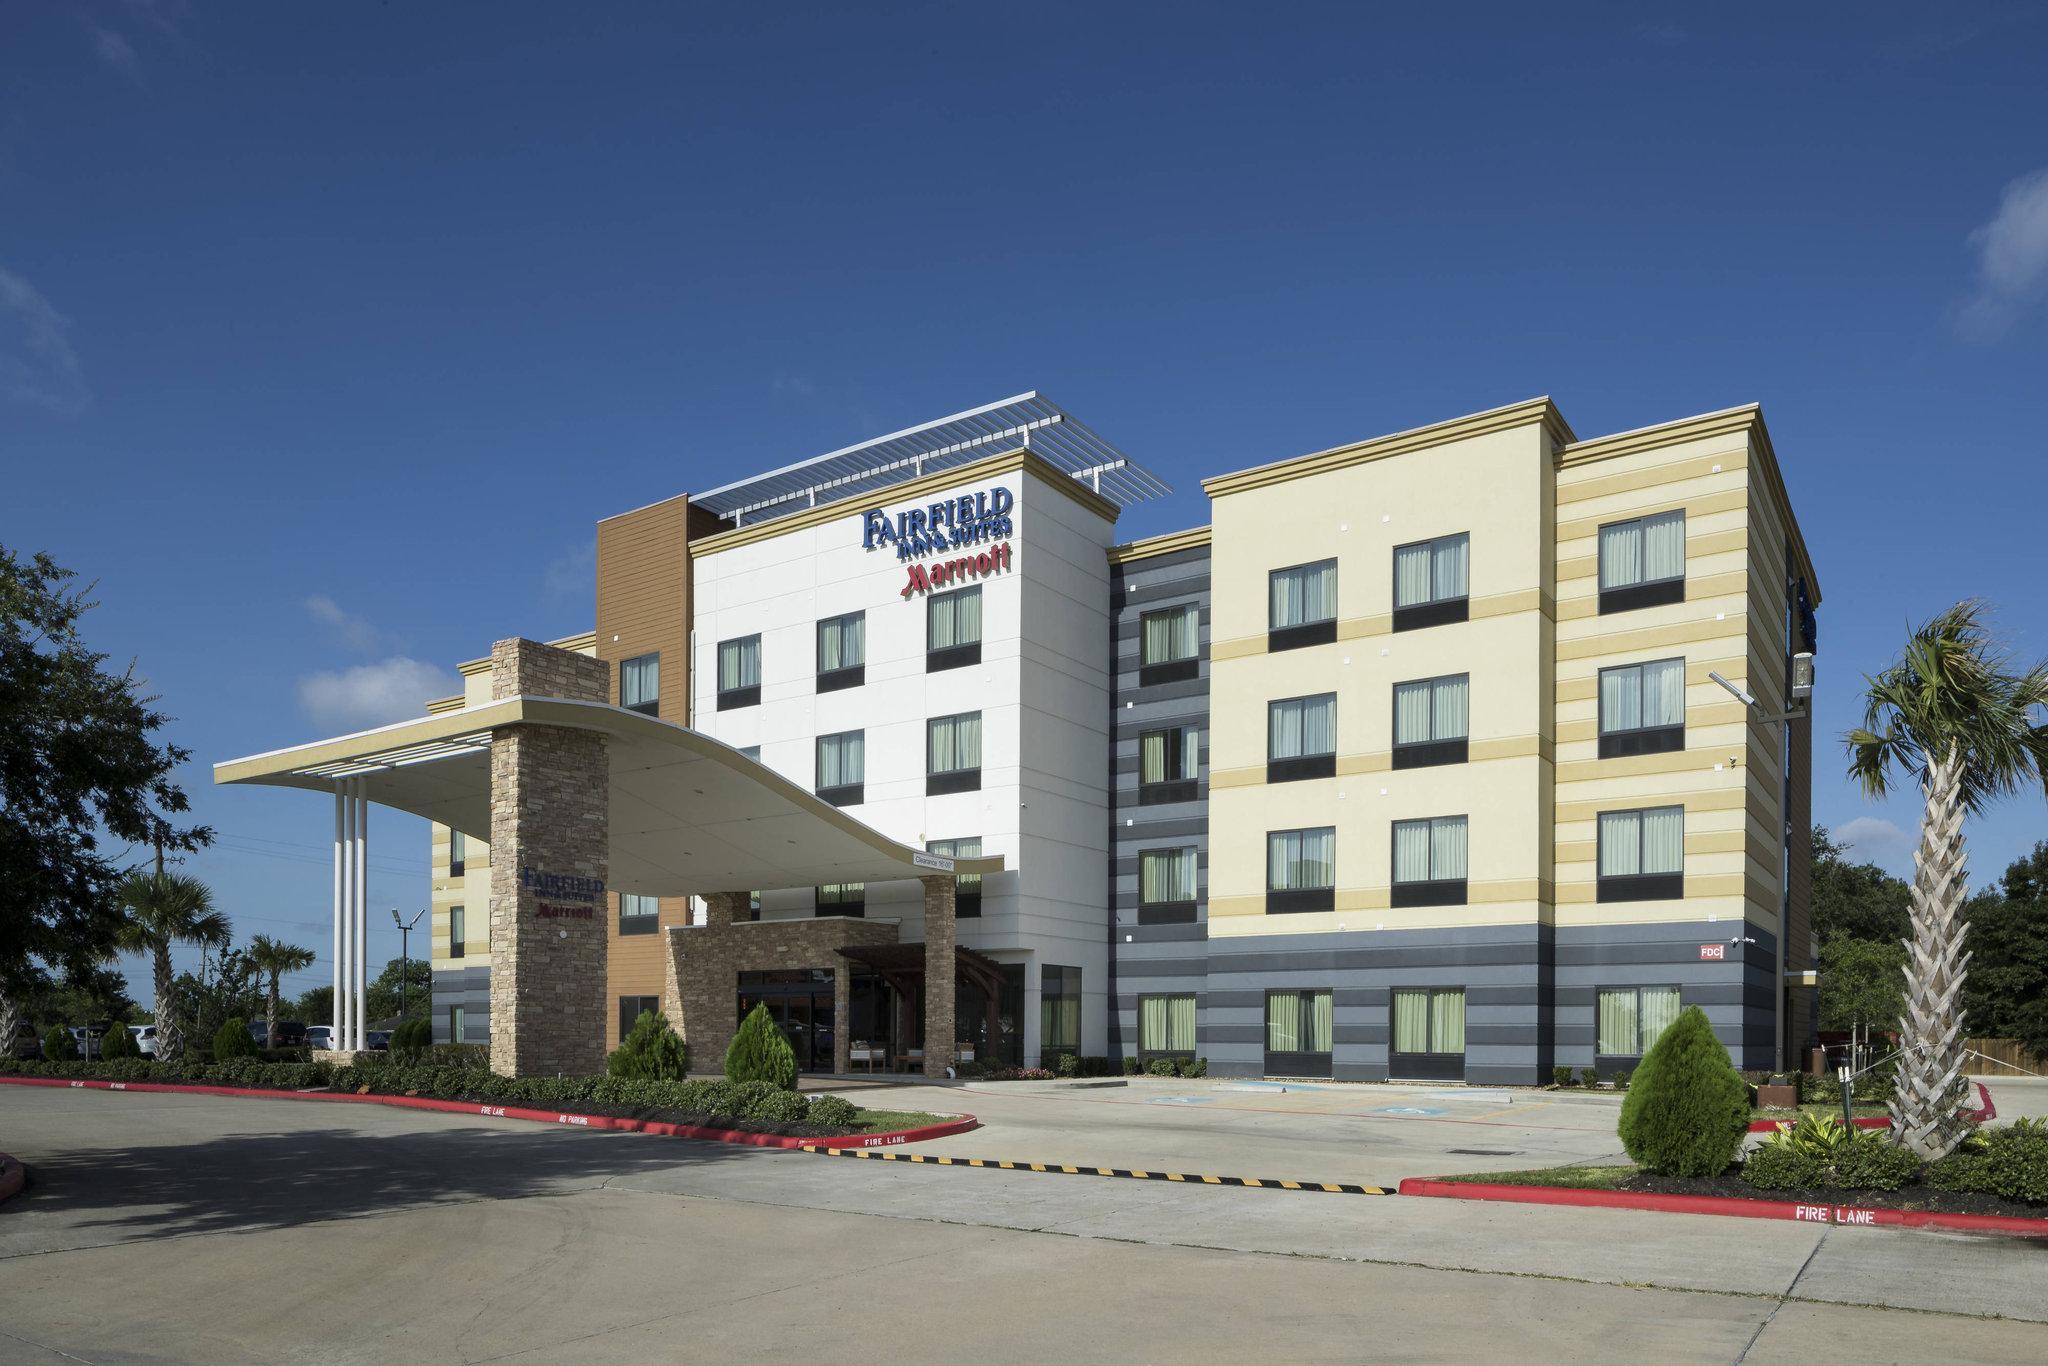 Fairfield Inn & Suites by Marriott Houston Pasadena image